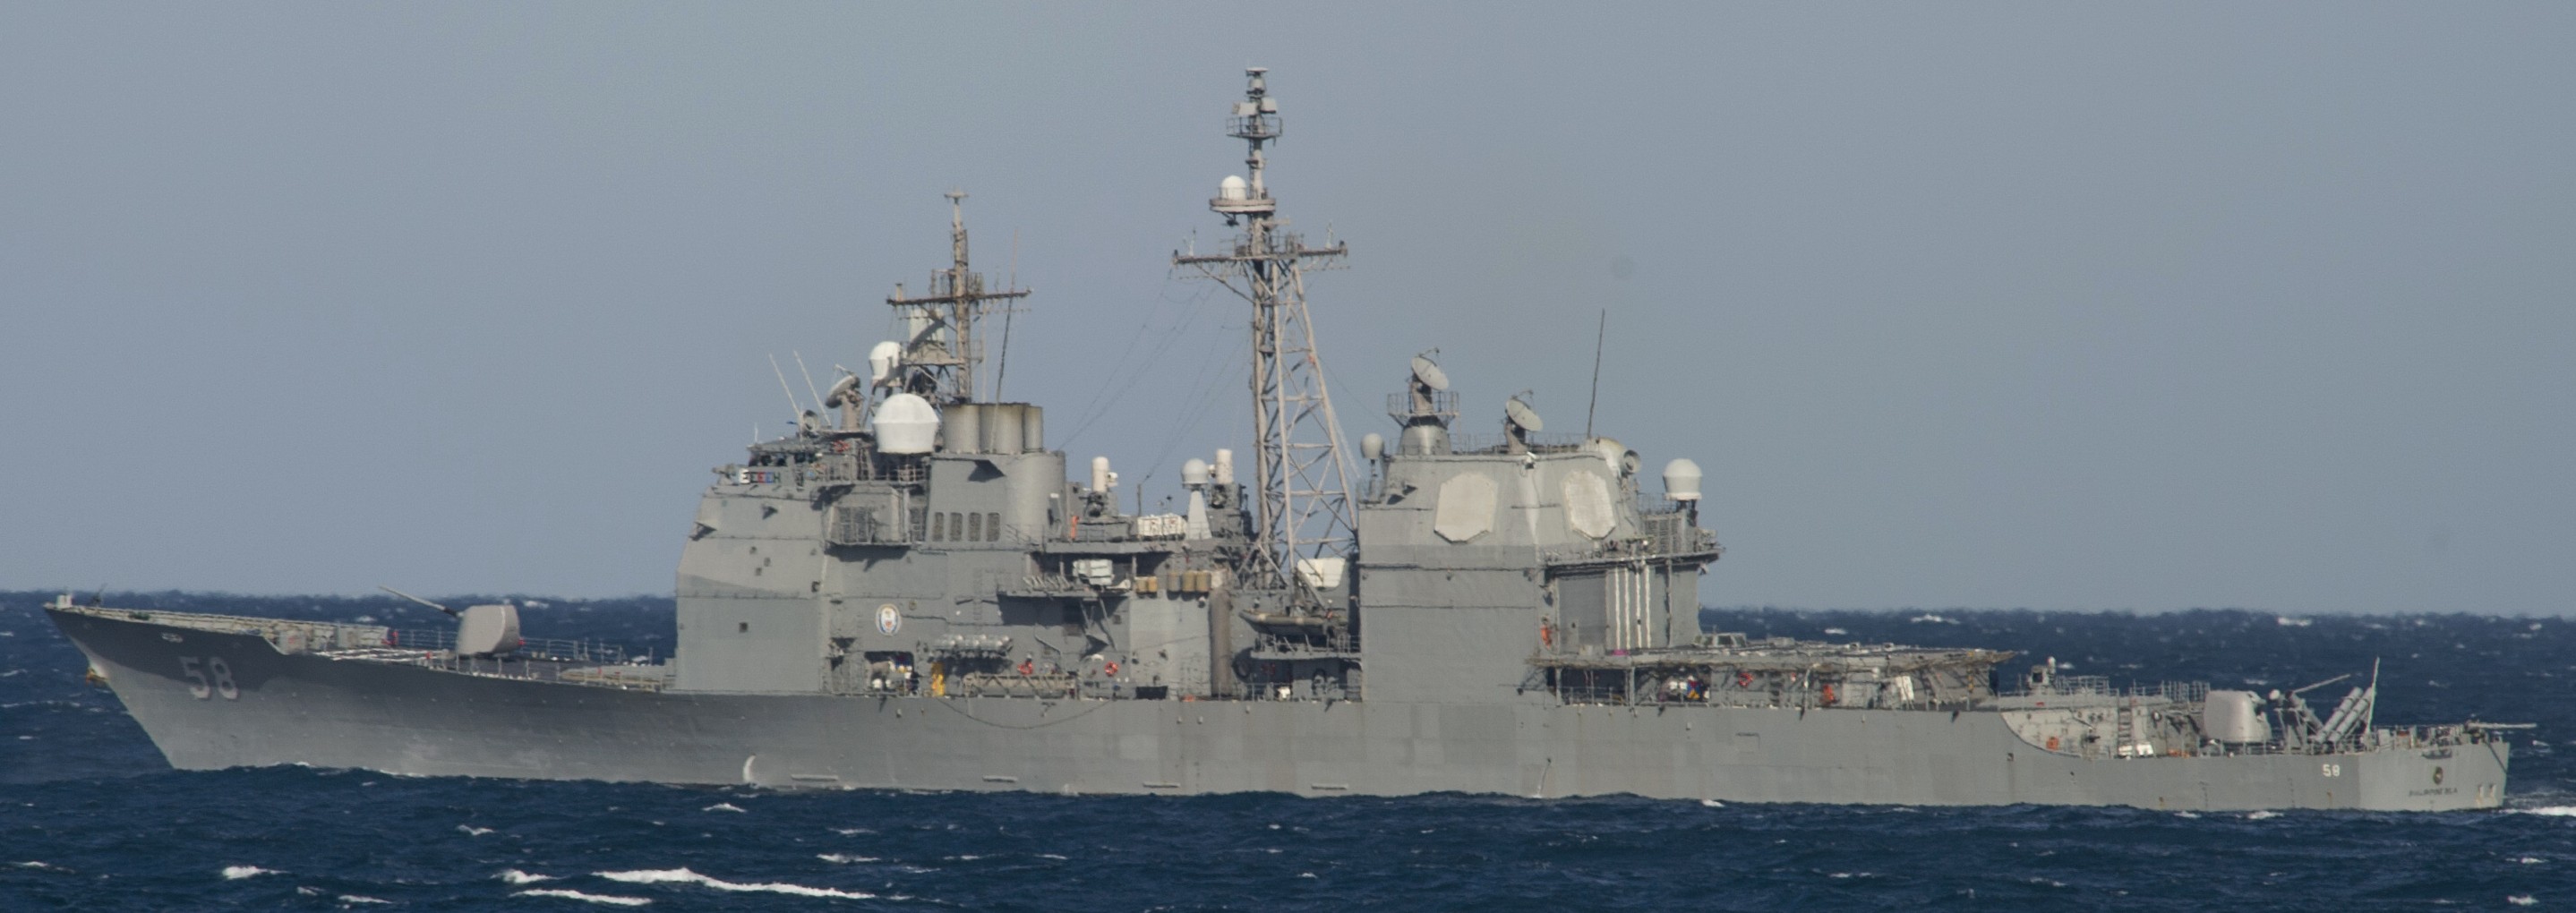 cg-55 uss leyte gulf ticonderoga class guided missile cruiser aegis us navy 40